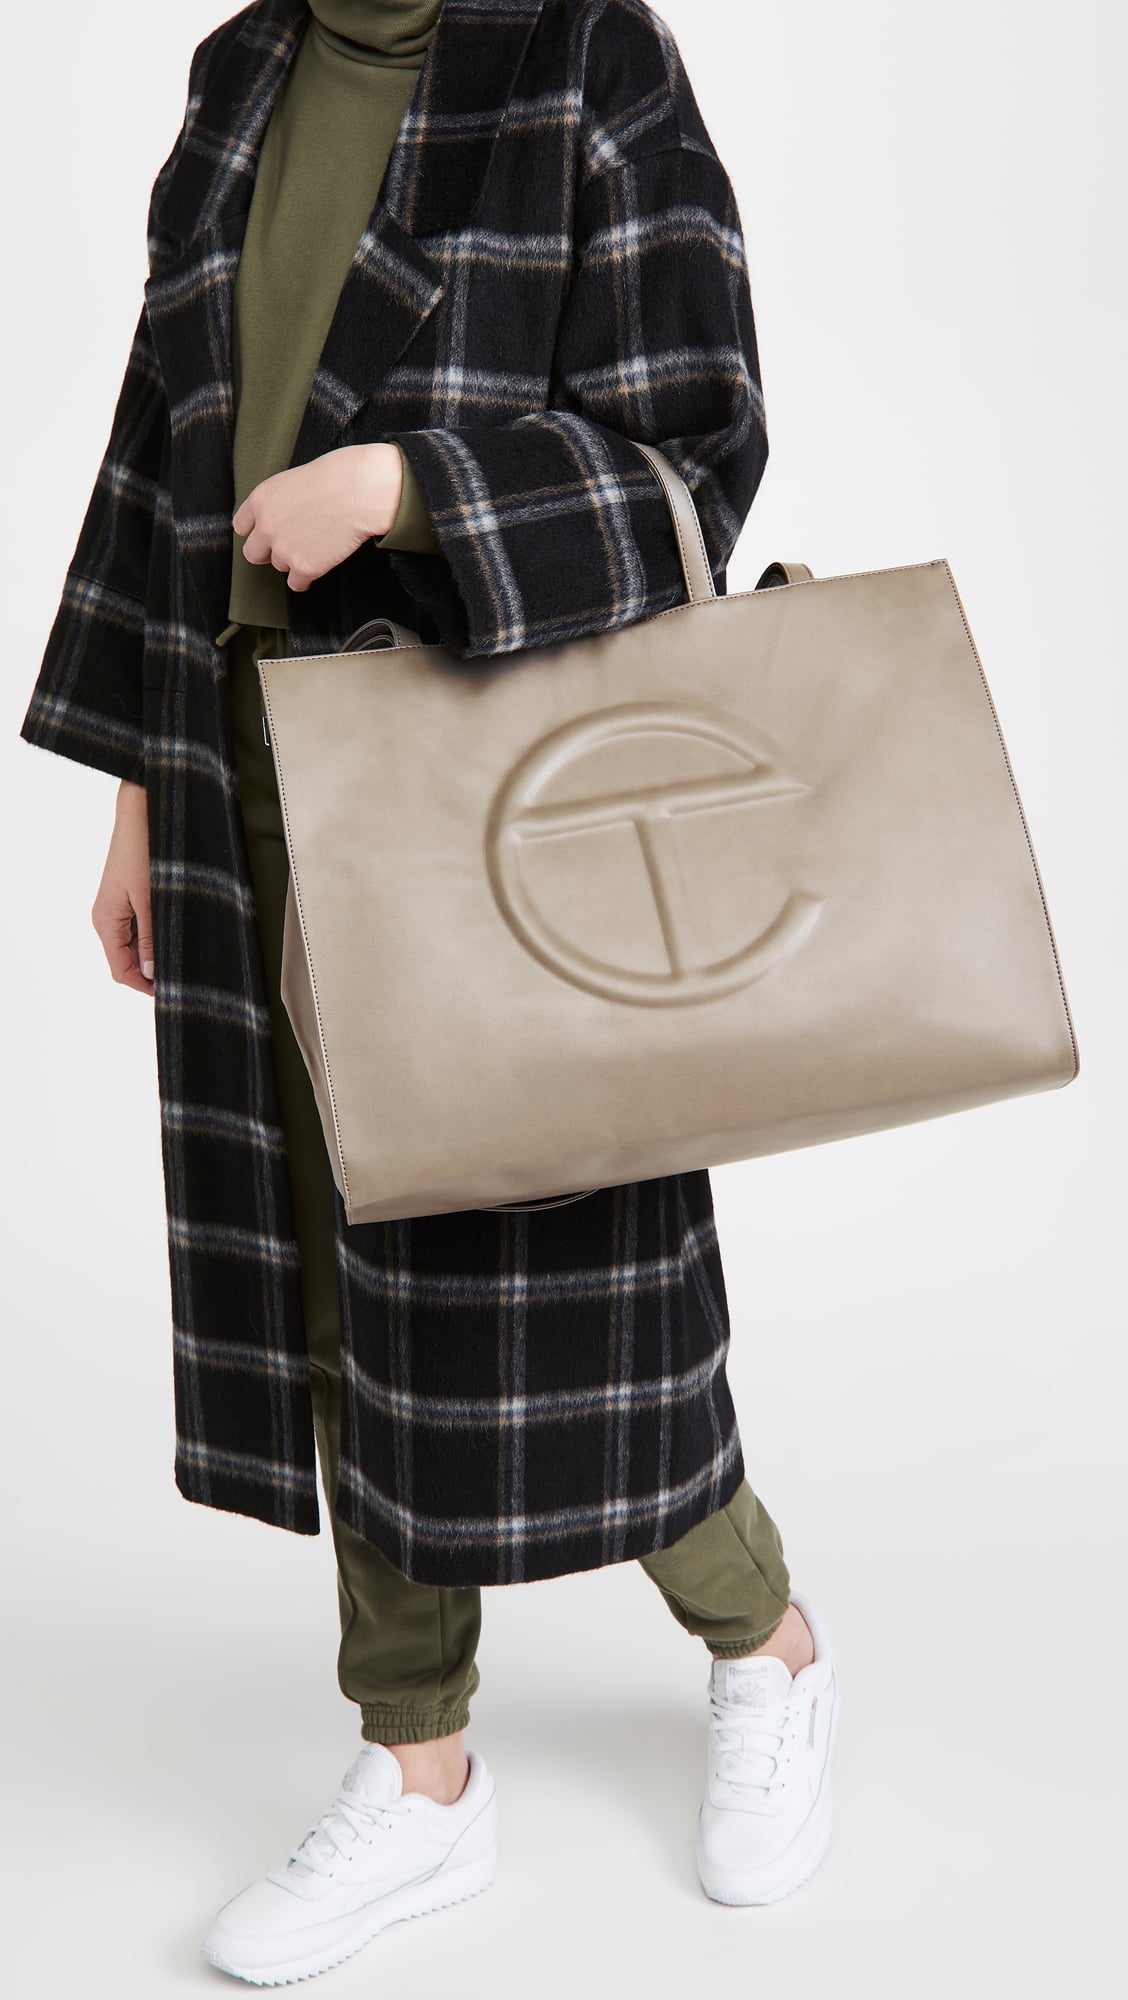 Telfar finally making it easier to buy the 'Bushwick Birkin' shopping bag